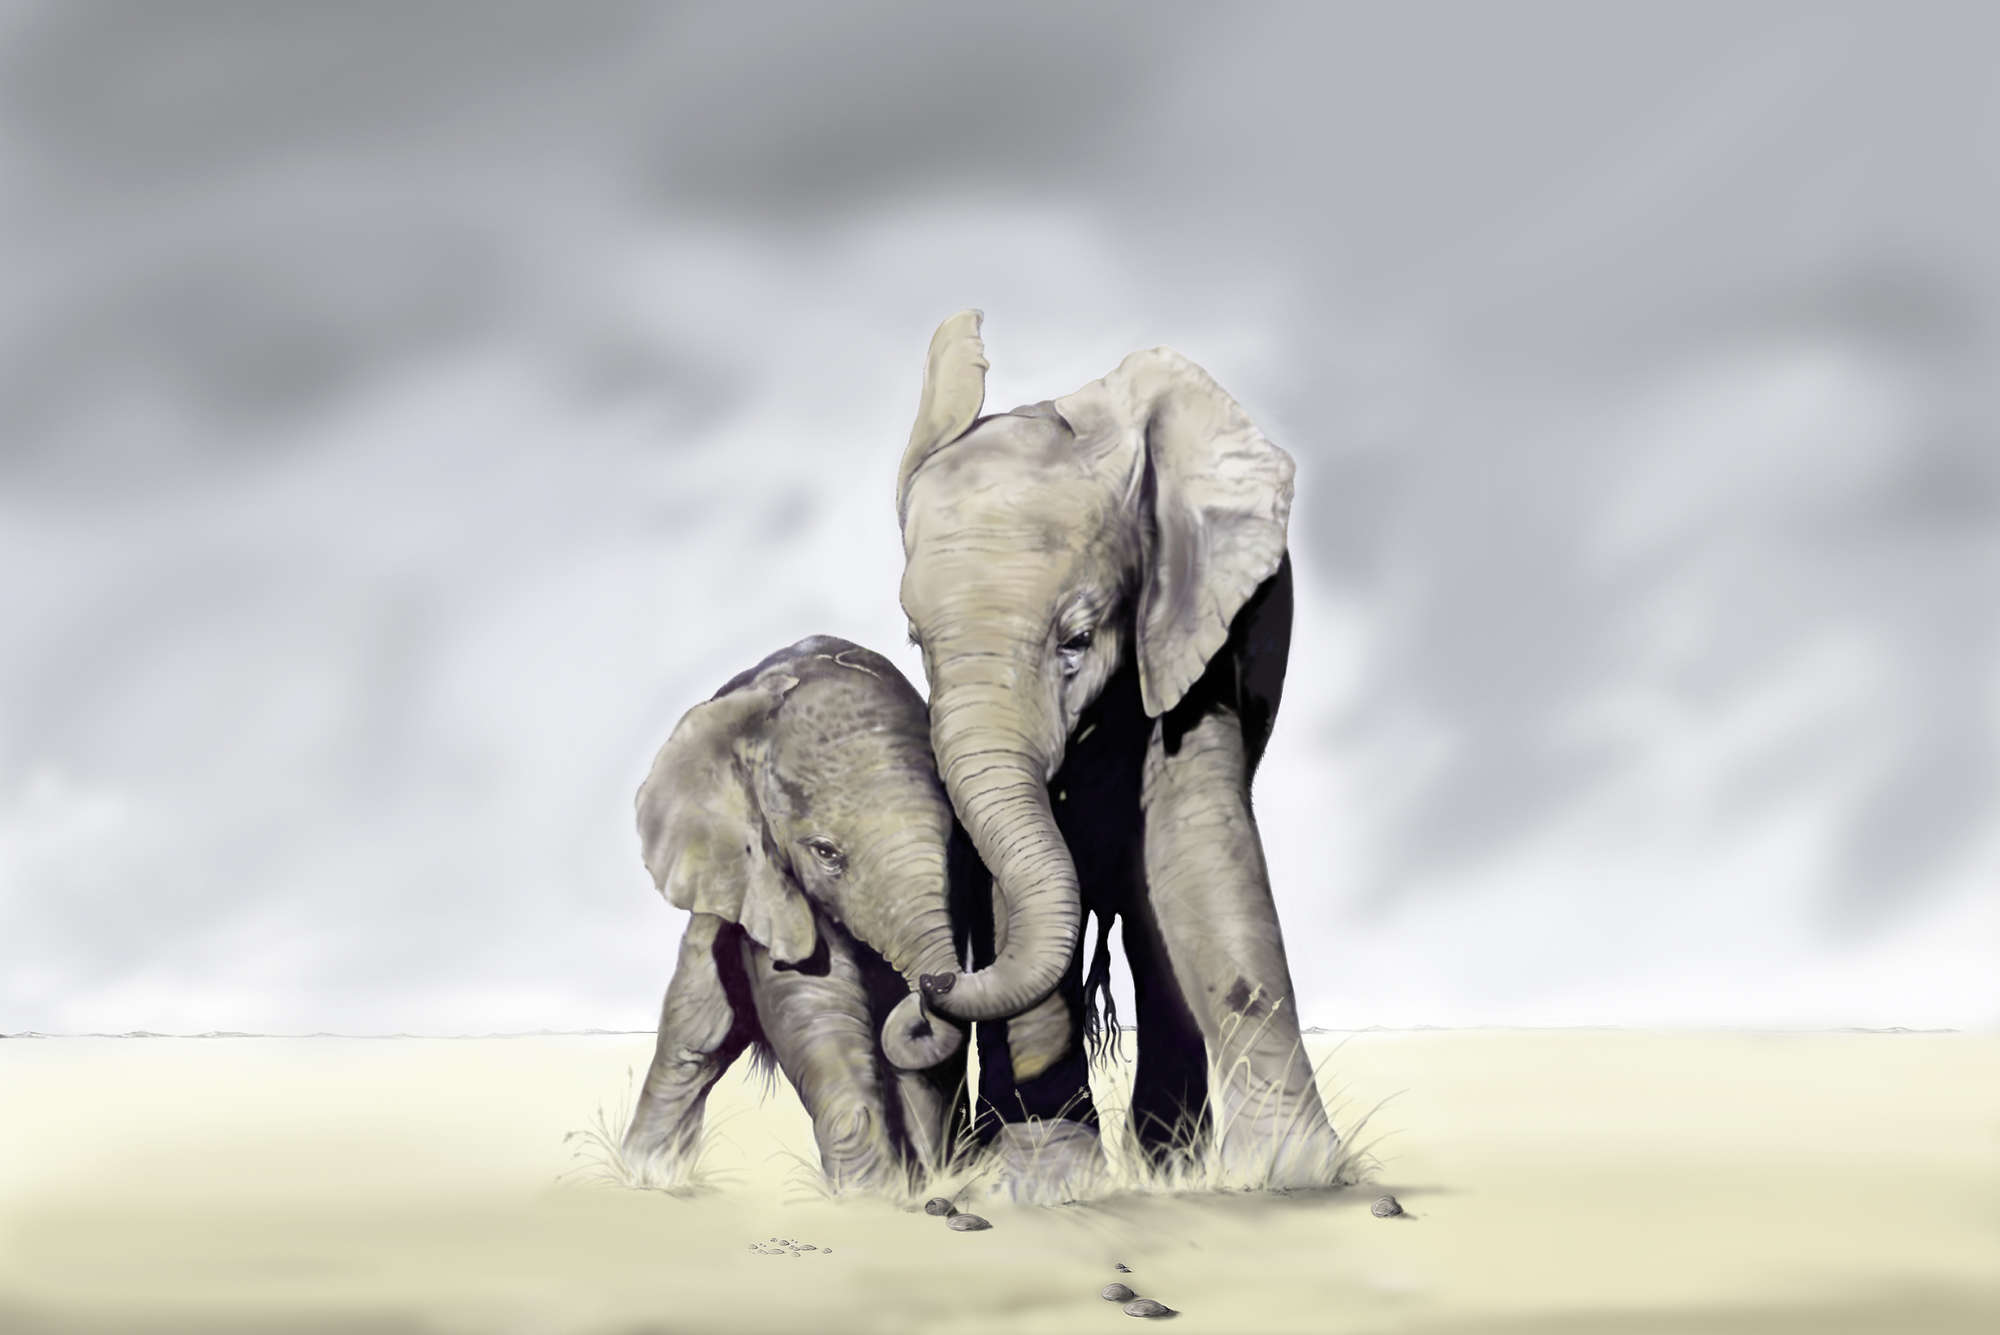             Tier Fototapete freie Elefanten – Premium Glattvlies
        